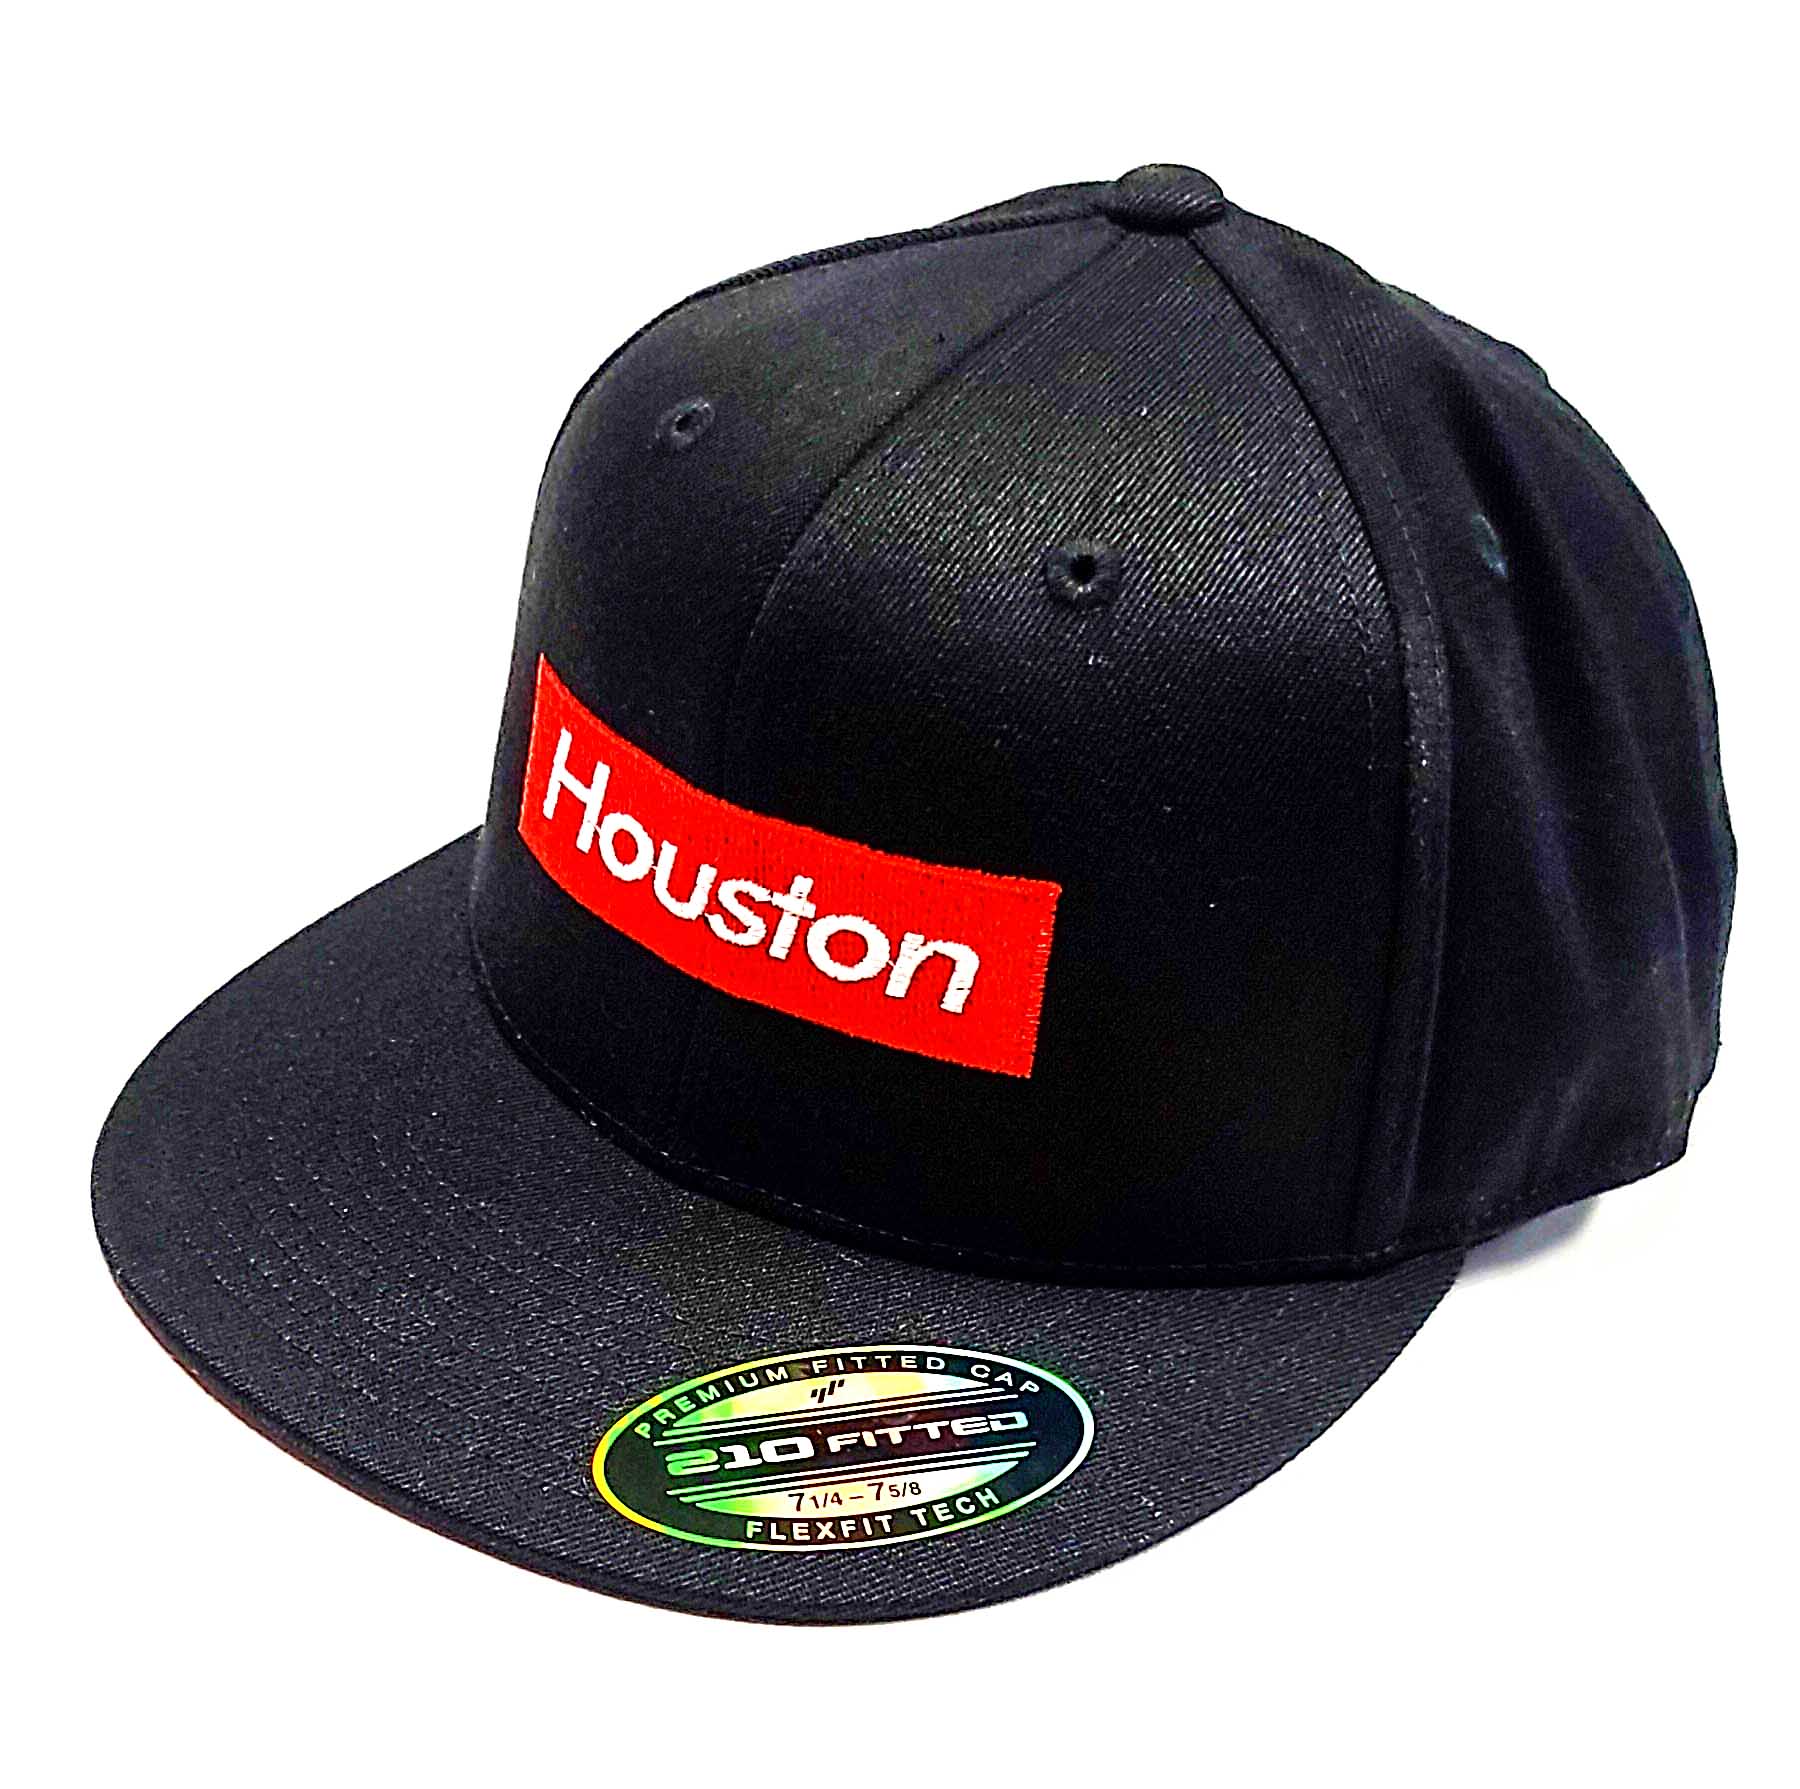 Houston Supreme logo on a Flexfit 6210 semi fitted cap